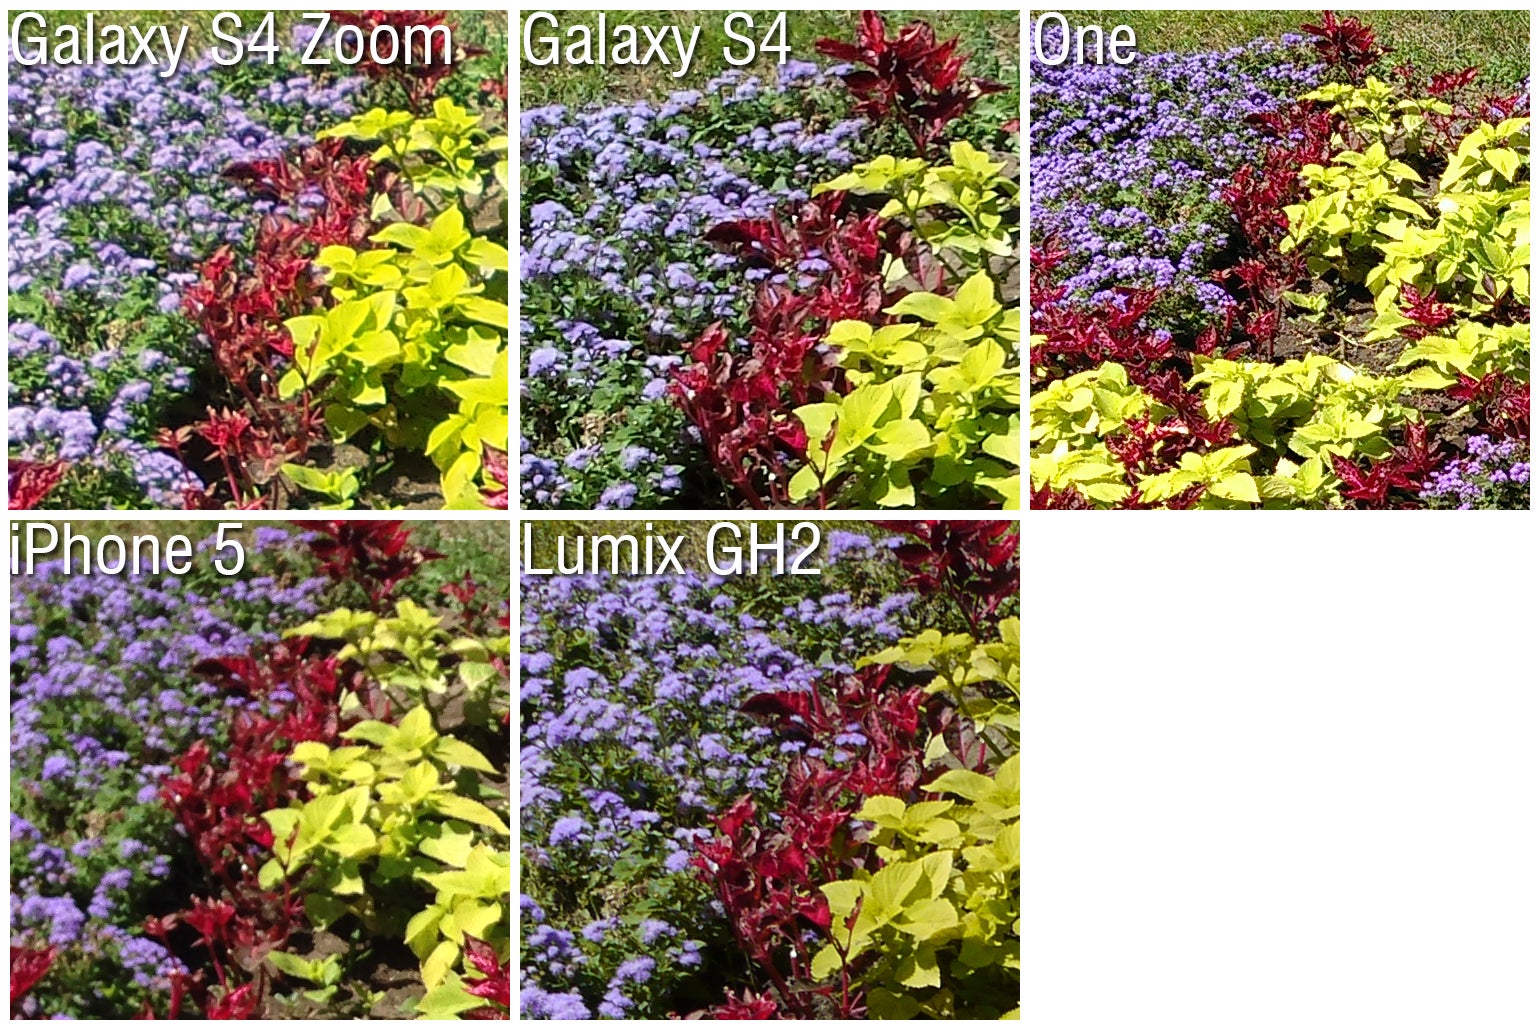 100% crop - Camera Comparison: Samsung Galaxy S4 Zoom vs Galaxy S4, HTC One, iPhone 5